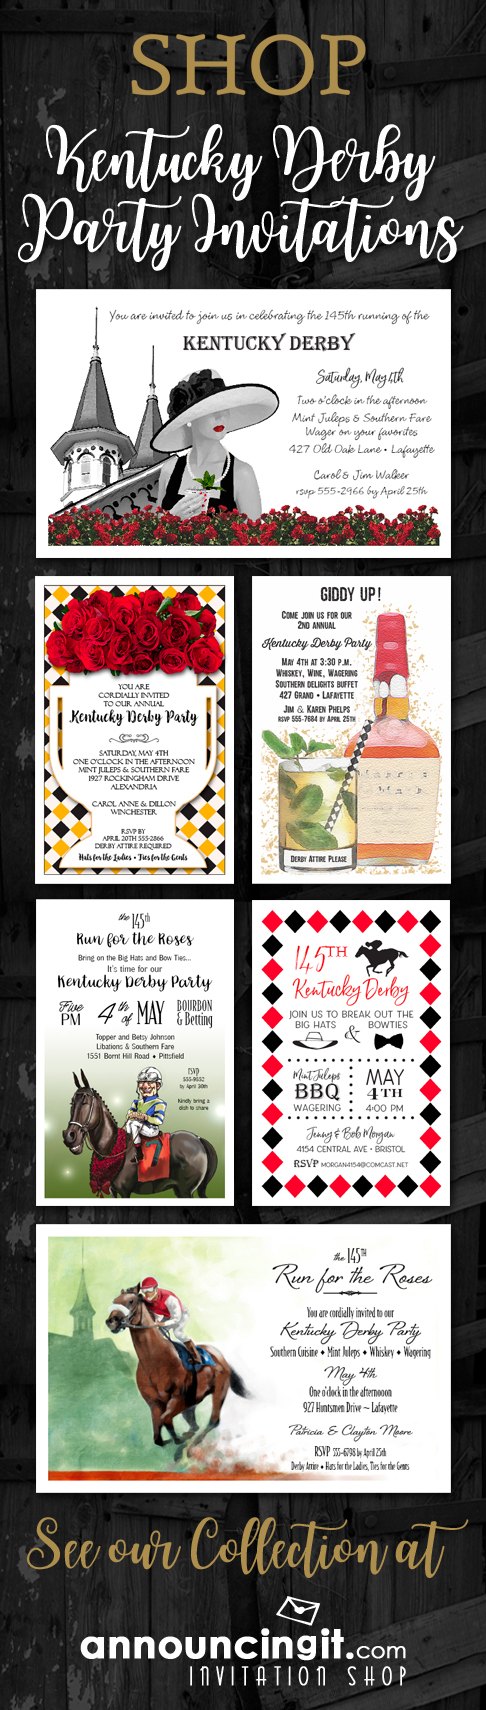 Kentucky Derby Party Invitations | Announcingit.com